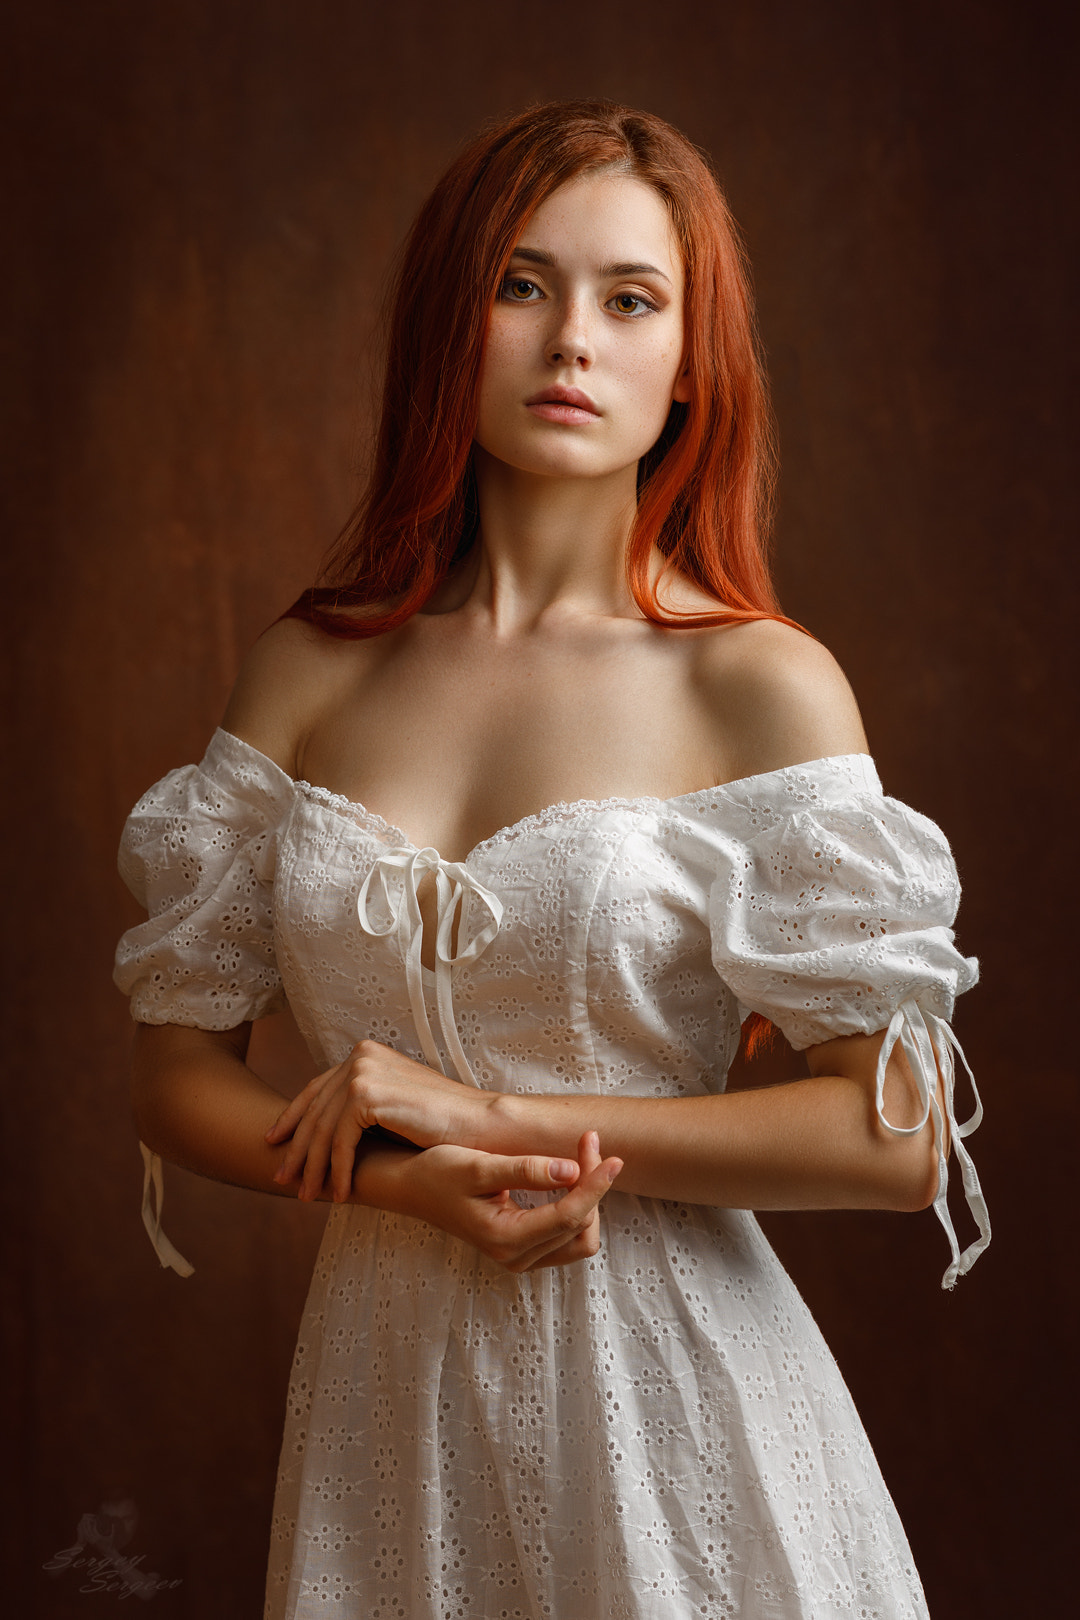 People 1080x1620 Sergey Sergeev women redhead bare shoulders dress white clothing freckles simple background Nadezhda Tretyakova sensual gaze